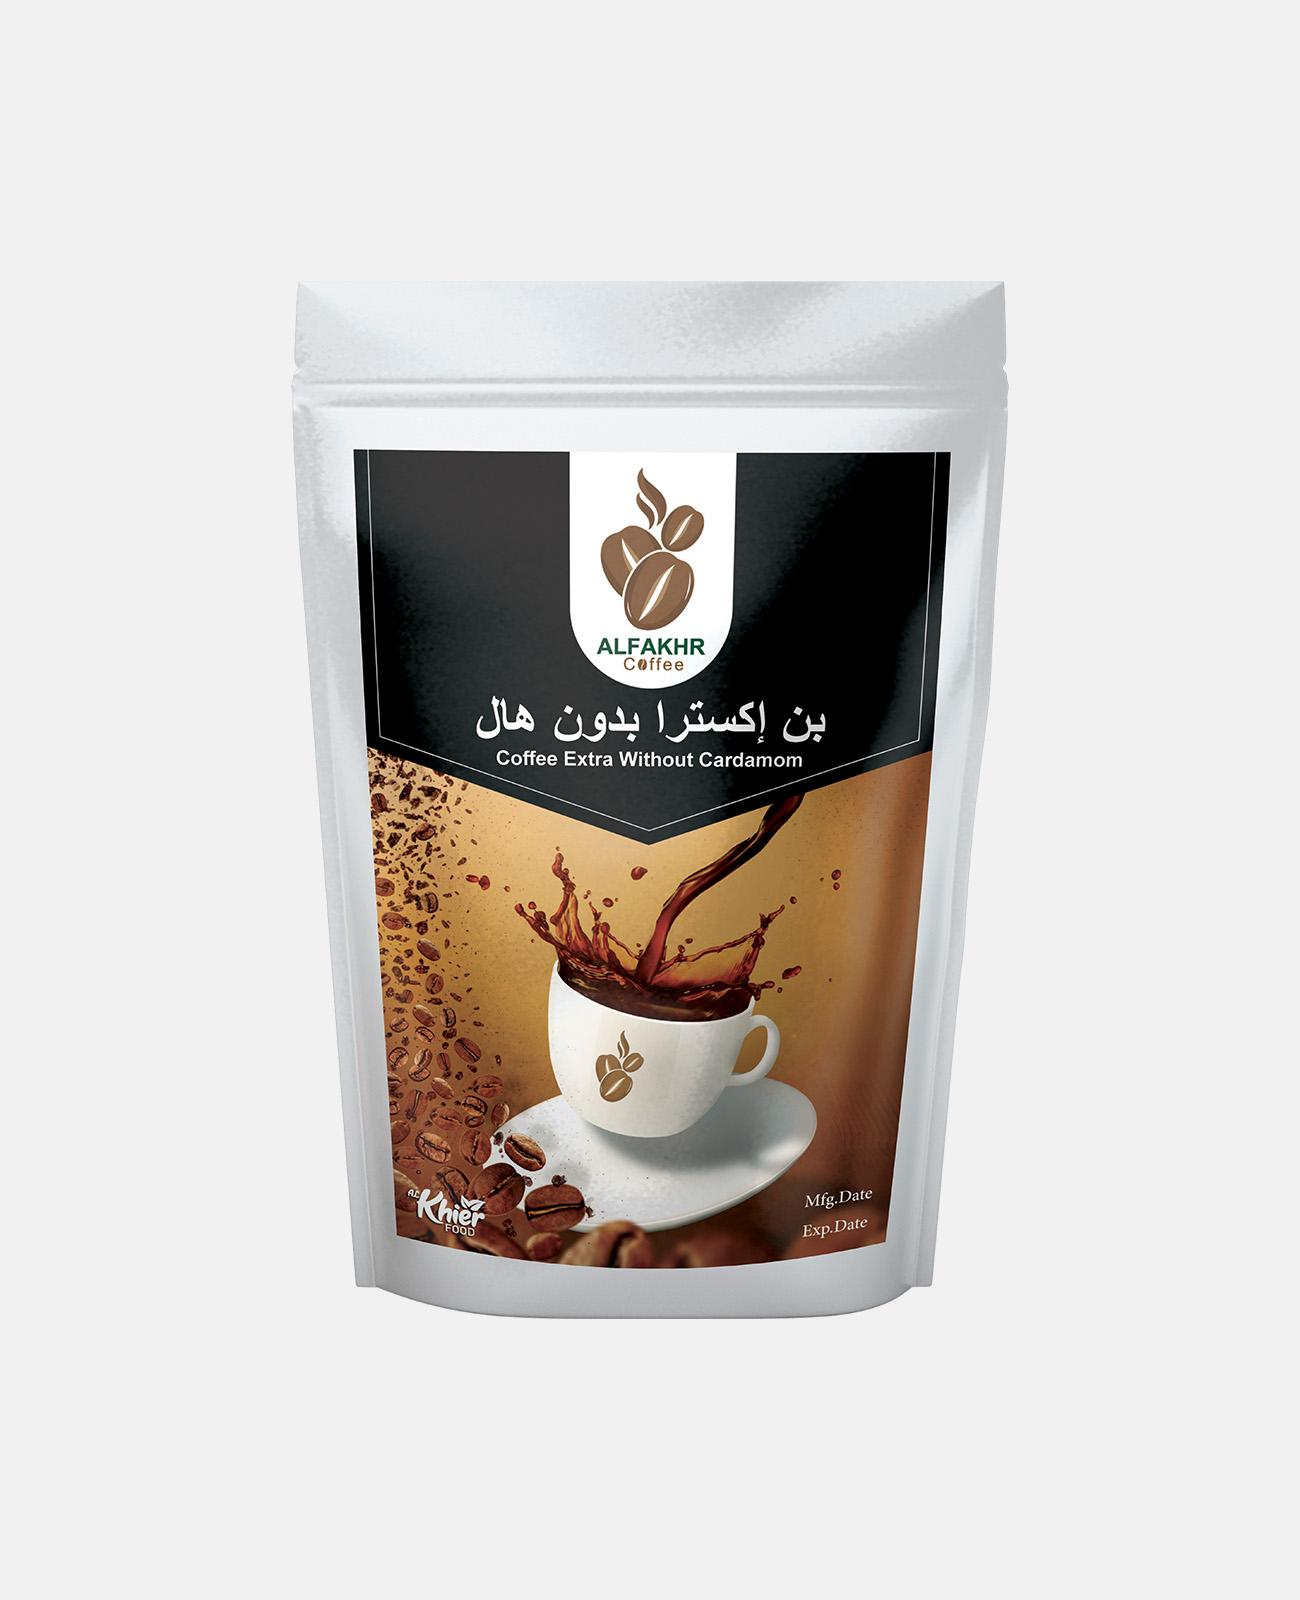 Alfakhr Premium Colombian Arabica Coffee